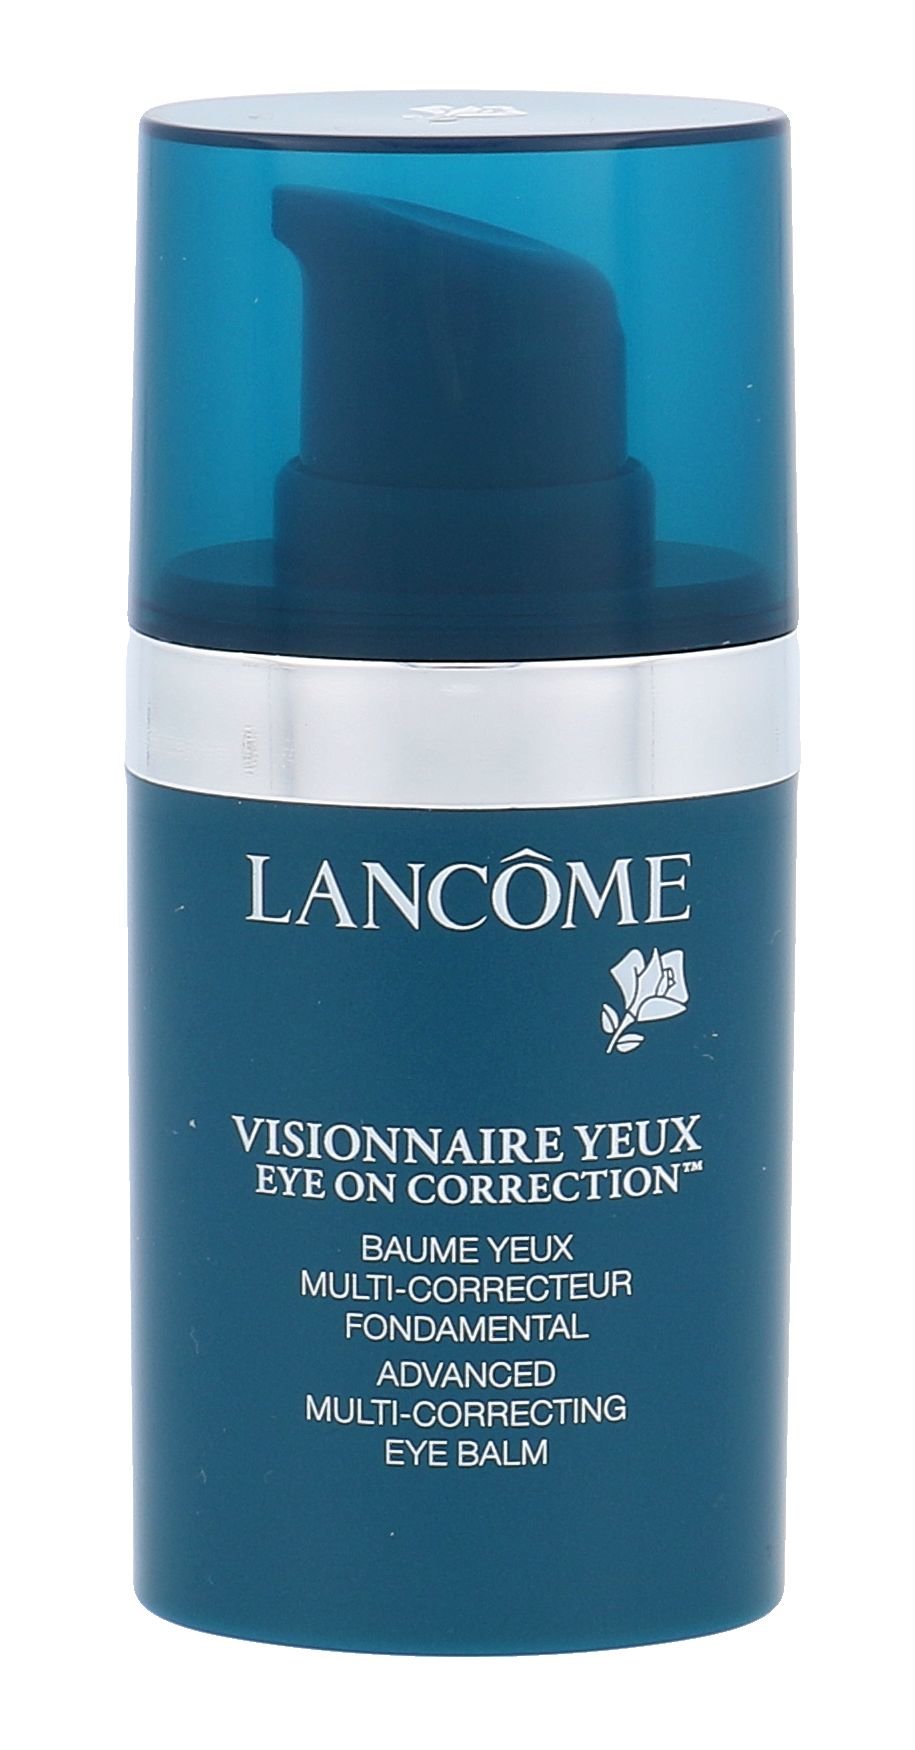 Lancome Visionnaire Yeux Advanced Eye Balm paakių kremas